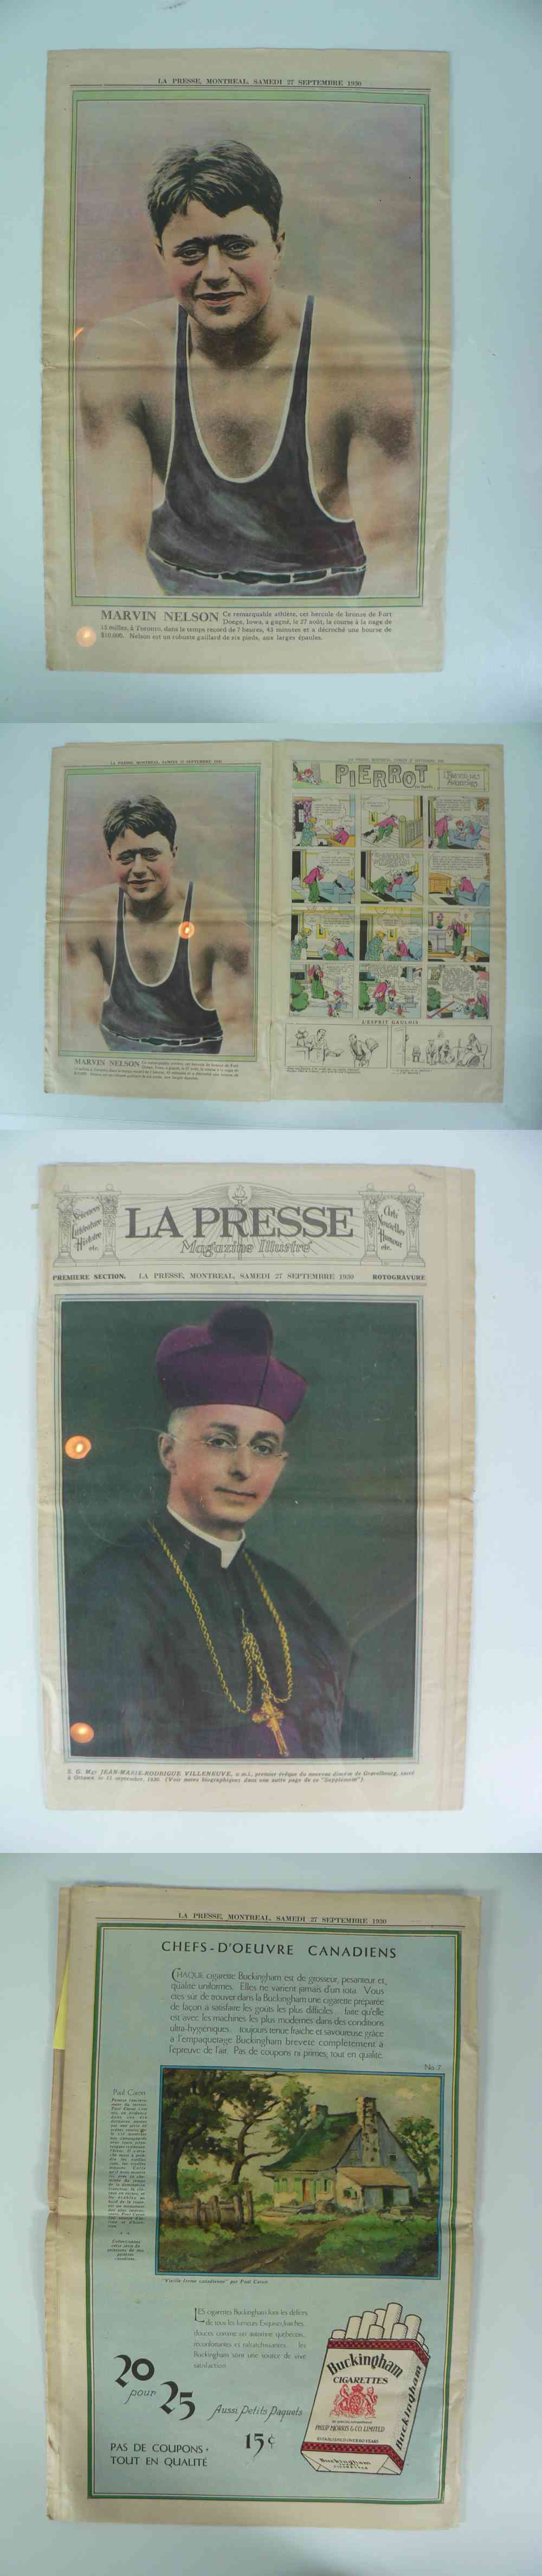 1930 LAPRESSE FULL NEWSPAPER INSIDE PHOTO M. NELSON photo